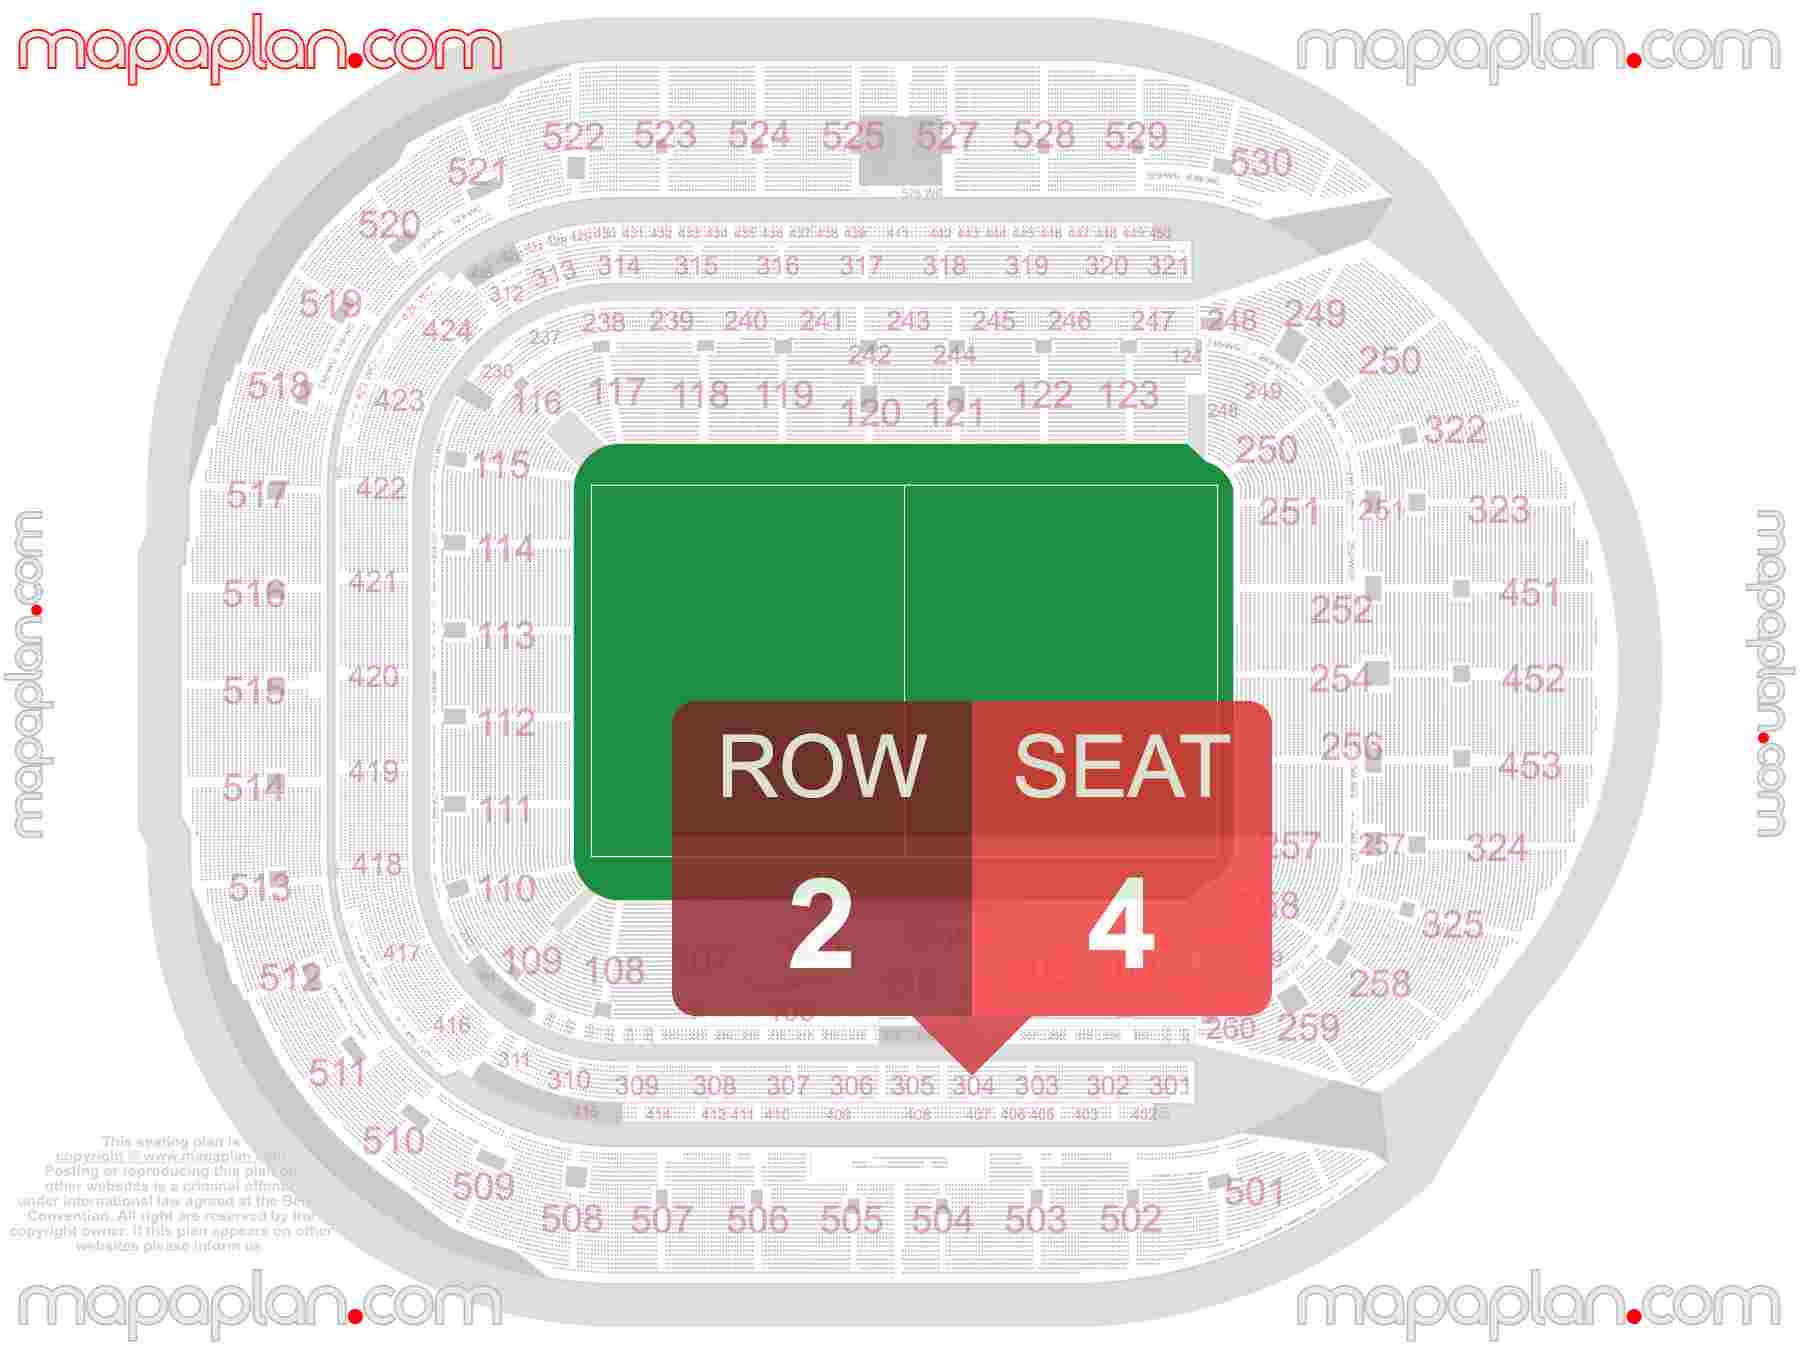 London Tottenham Hotspur Stadium seating plan Tottenham Hotspur detailed seat numbers and row numbering plan with interactive map chart layout